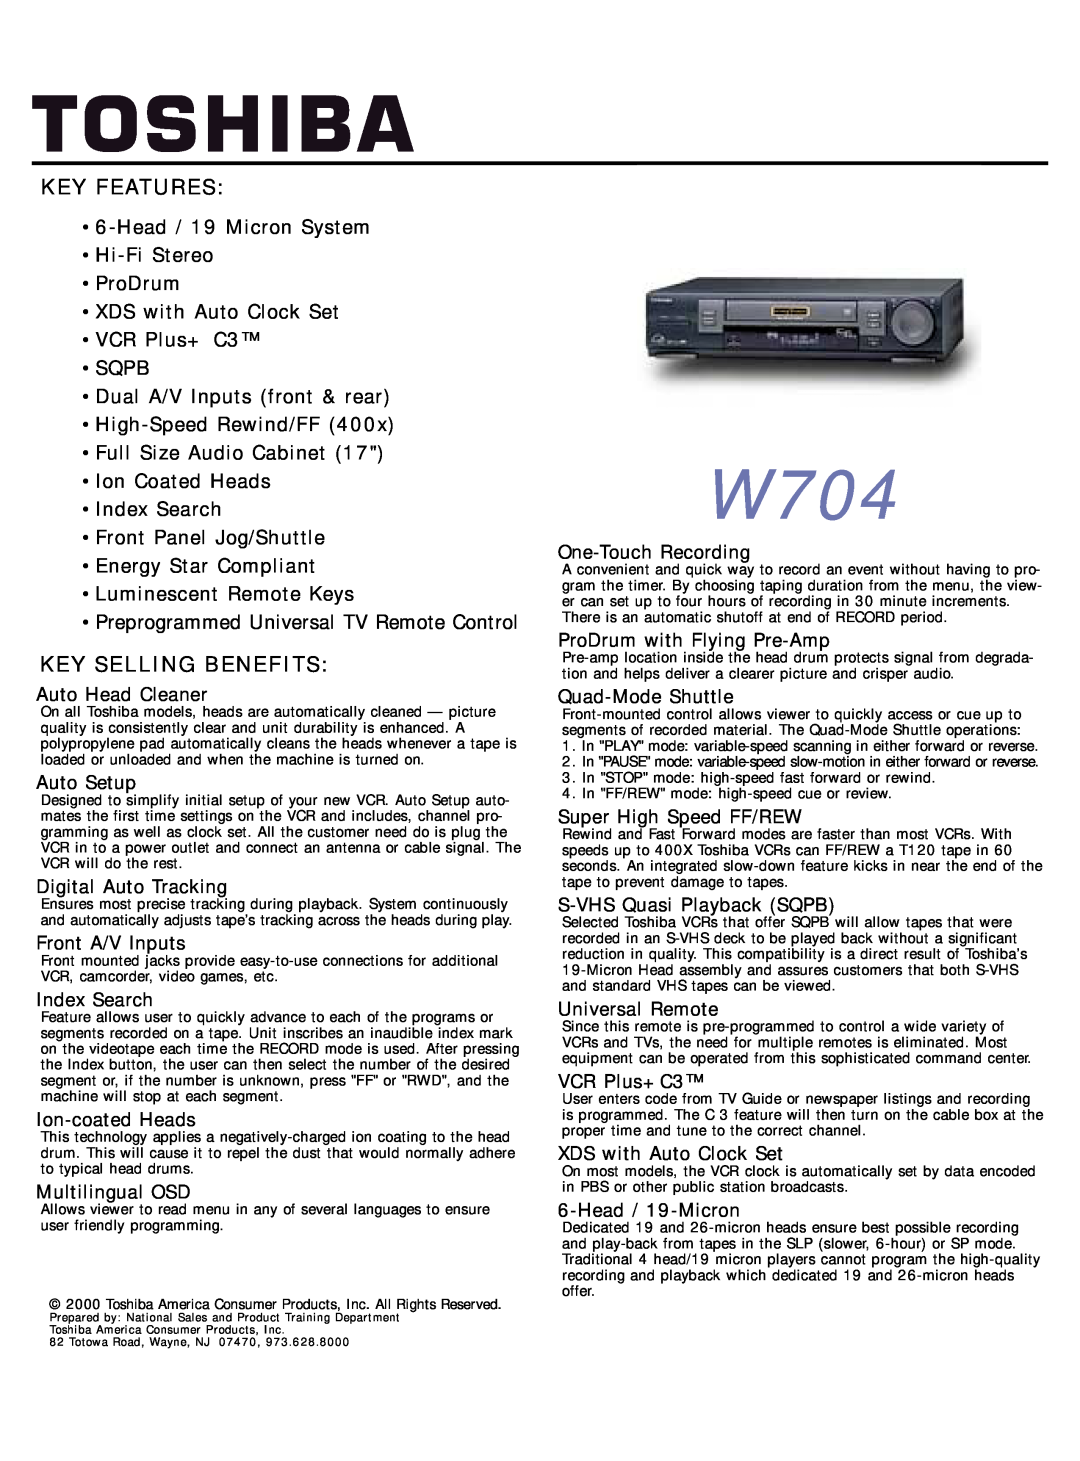 Toshiba W704 manual Key Features, Key Selling Benefits 